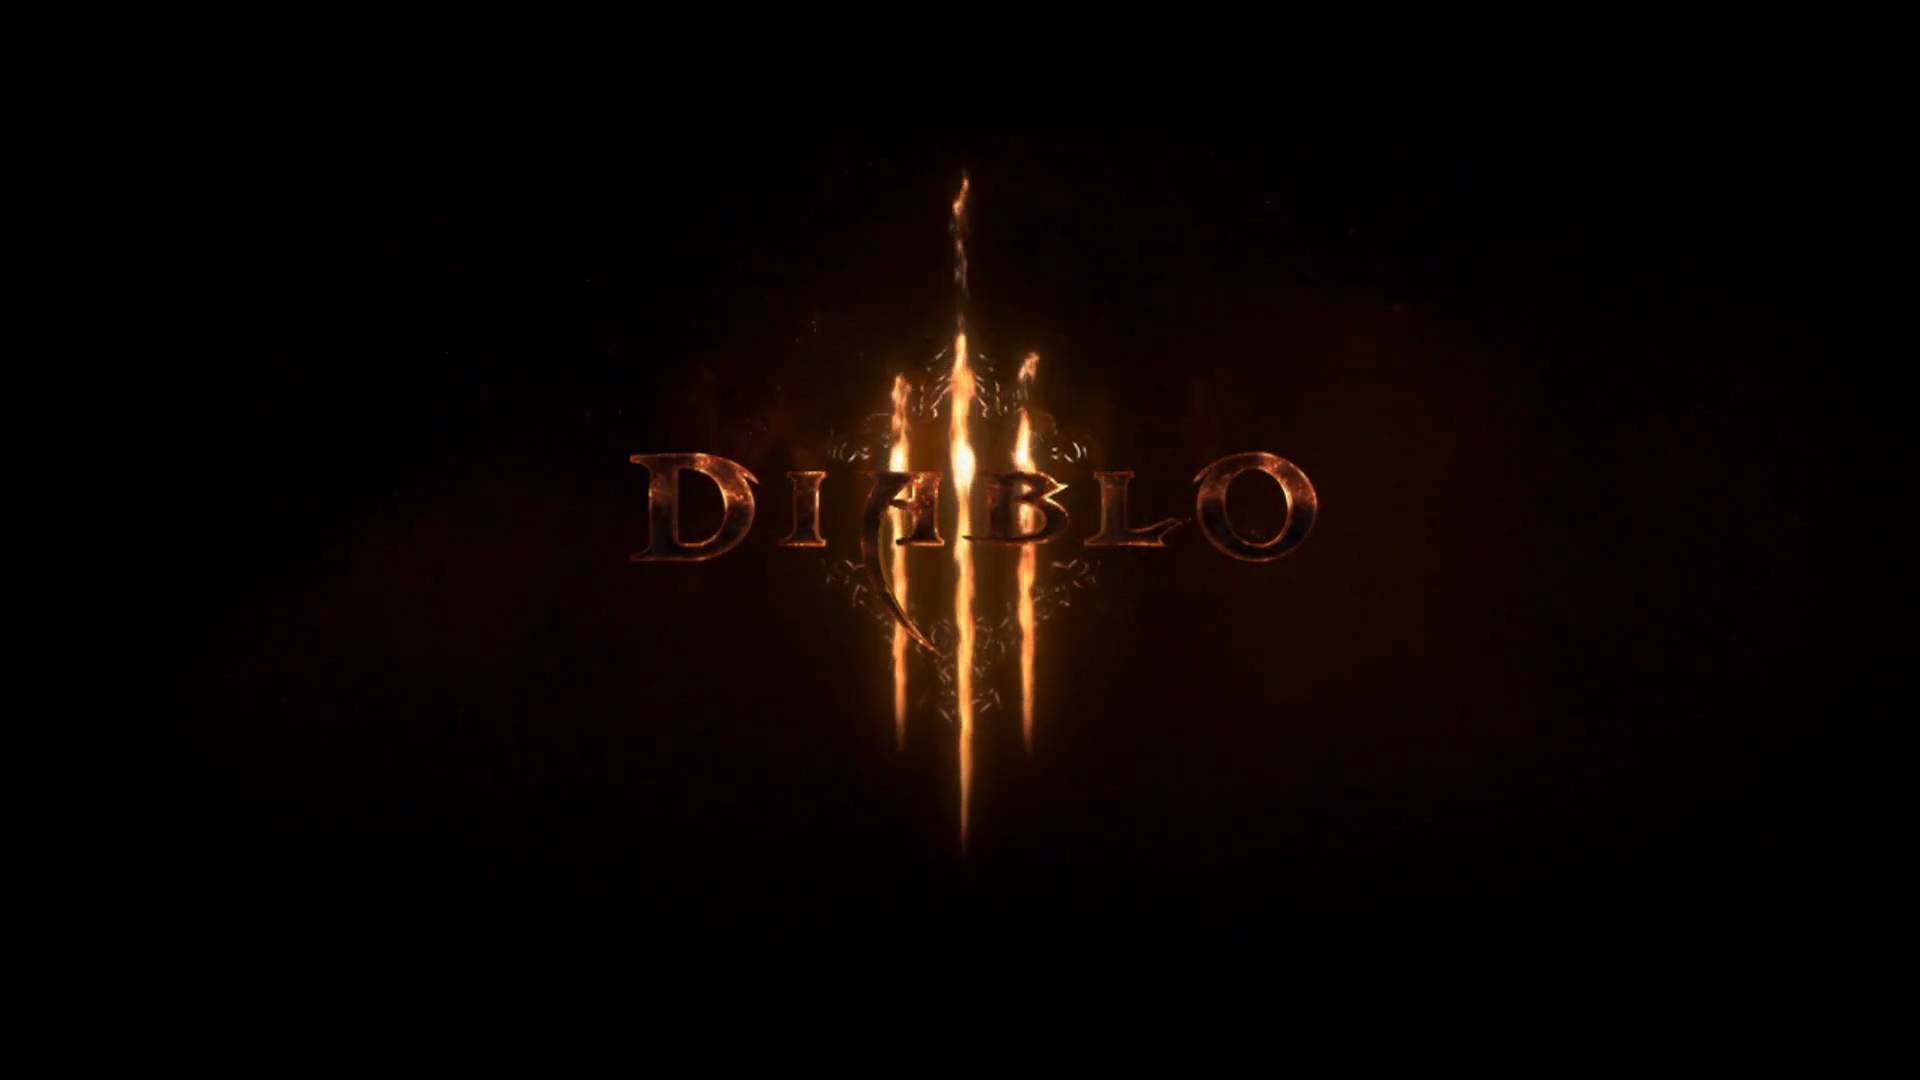 Diablo 3 logo animated wallpaper 1080p - YouTube